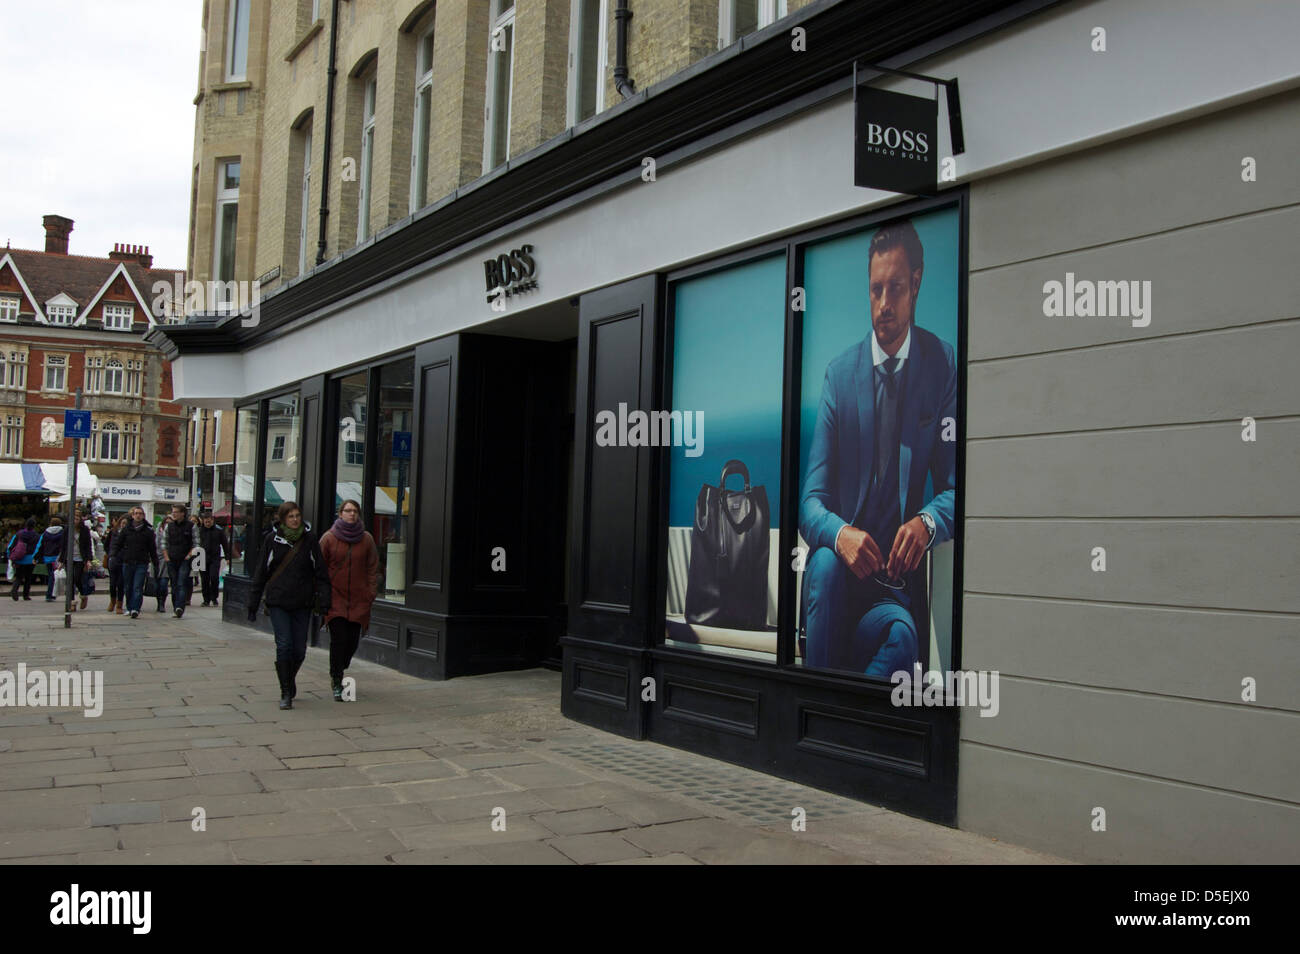 Hugo Boss shop on Market Street in Cambridge Stock Photo - Alamy